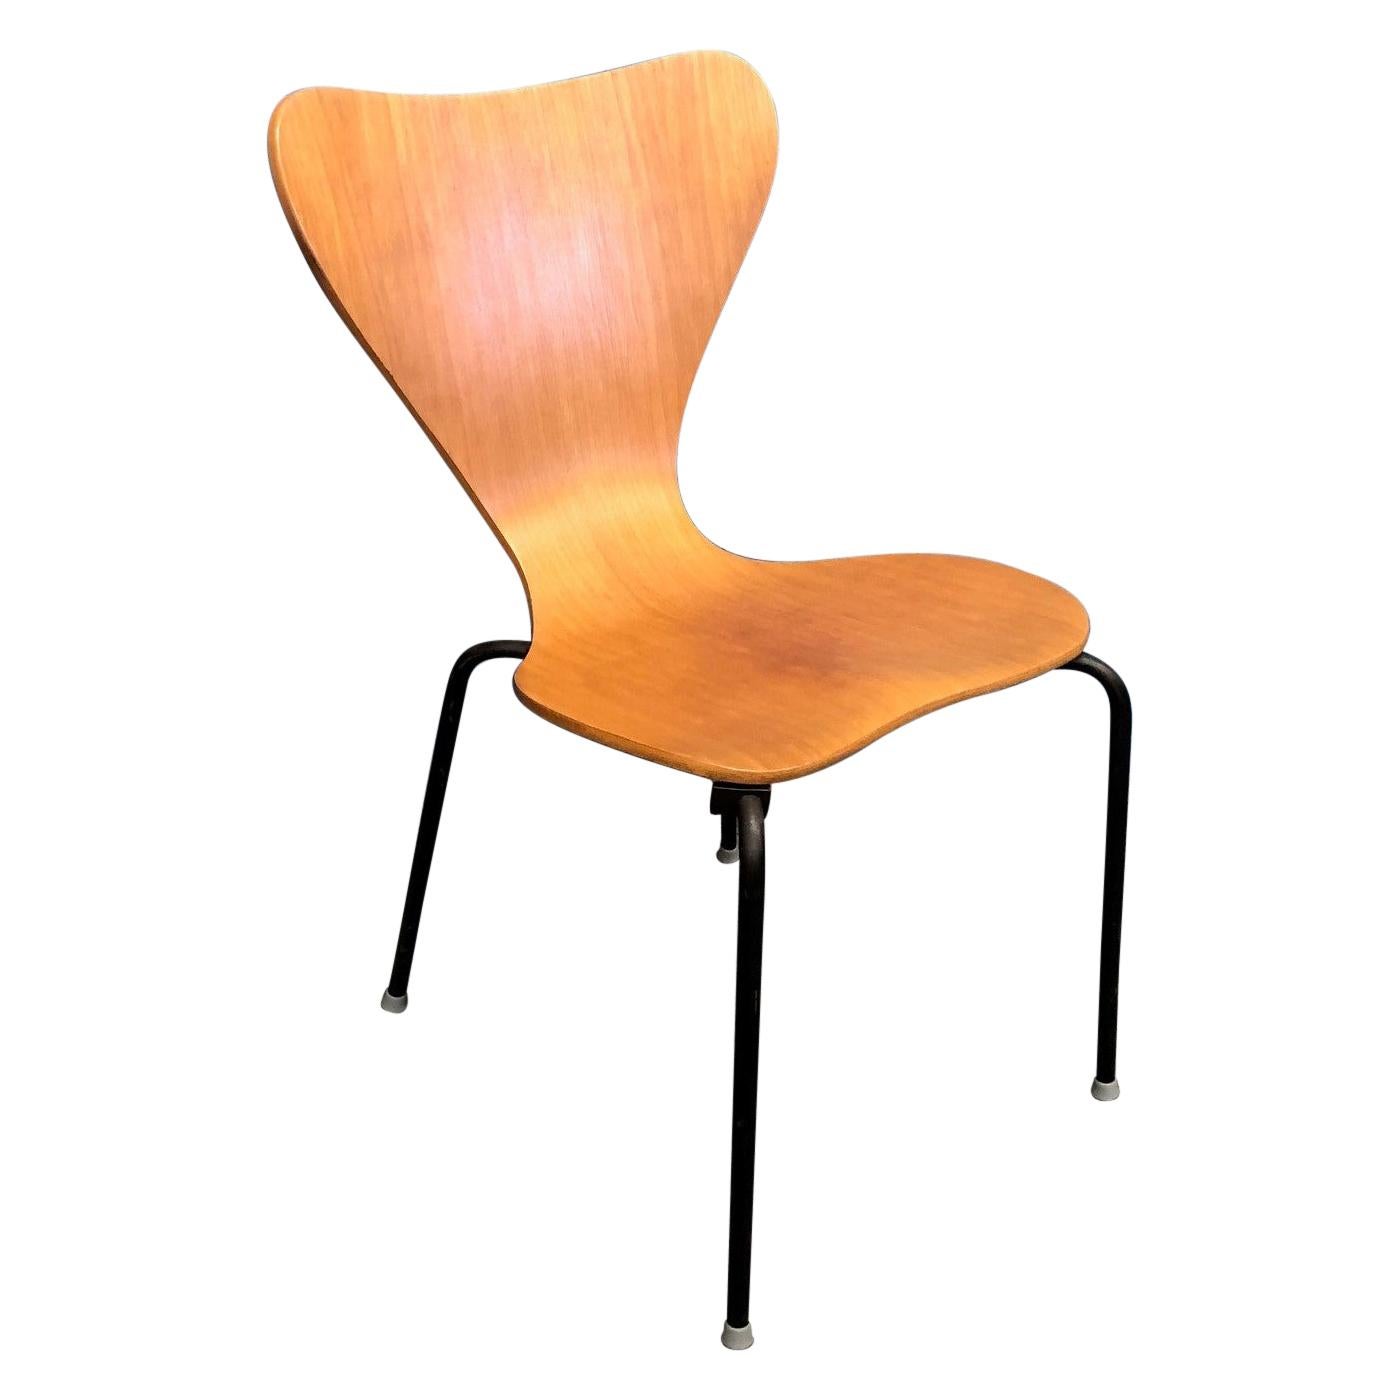 Danish Modern Chair in Teak by Herbert Hirche for Jofa Stalmobler